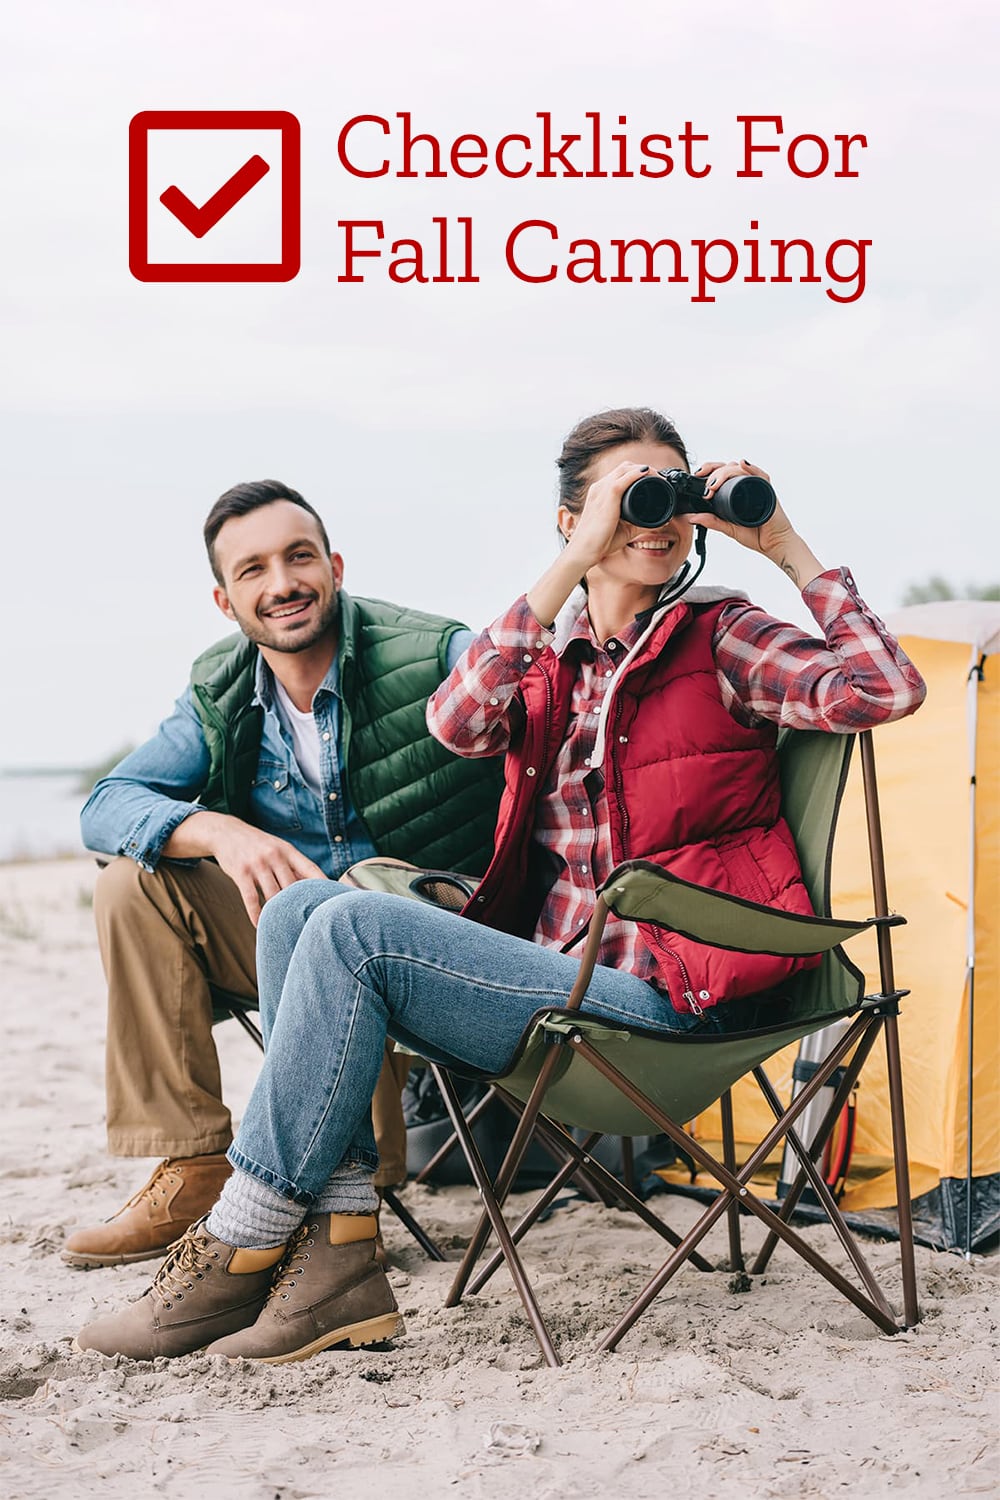 Fall camping checklist